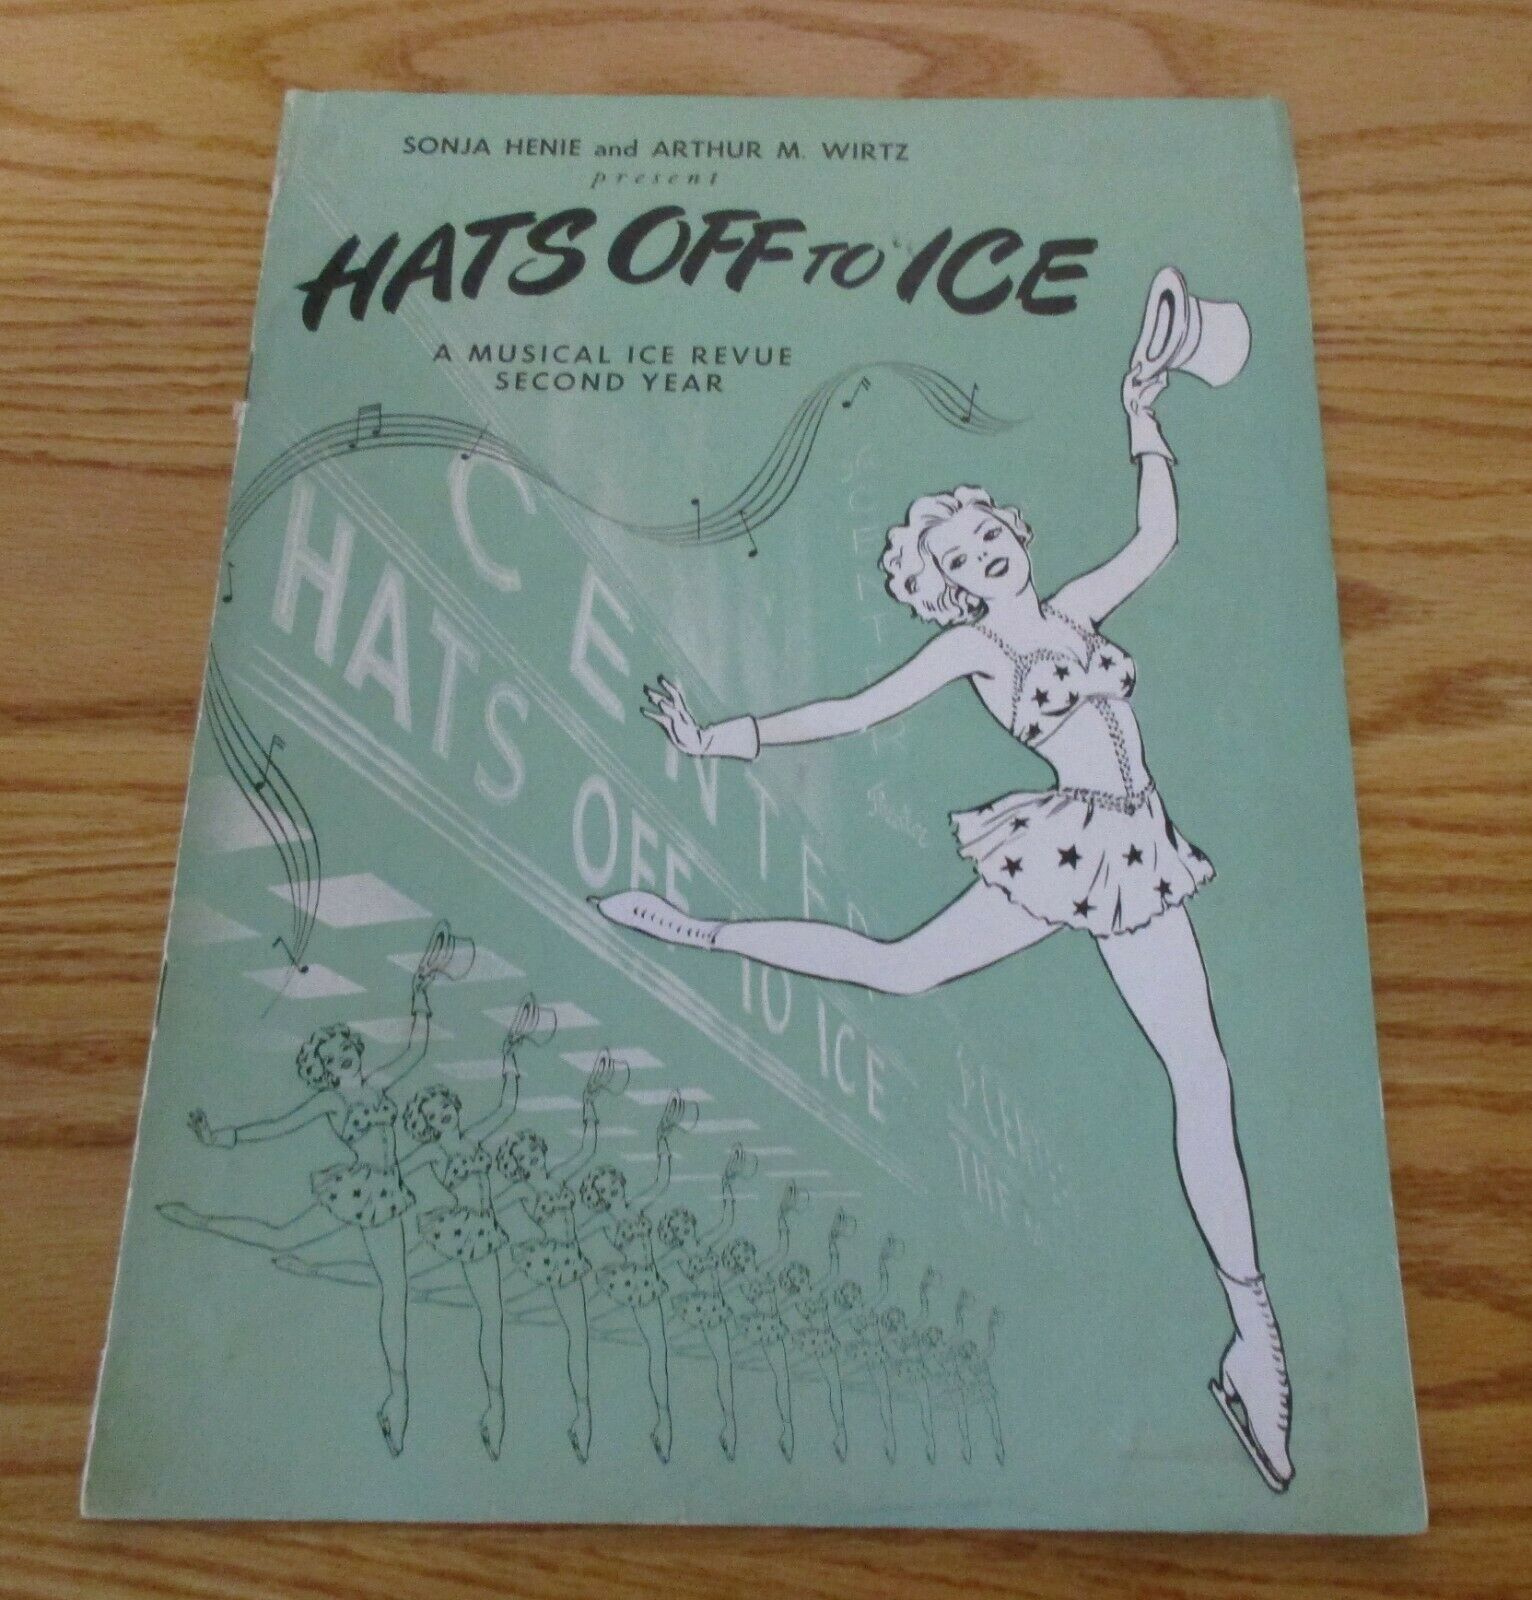 Vintage 1940s Sonja Henie Arthur Wirtz Hats Off To Ice Souvenir Program